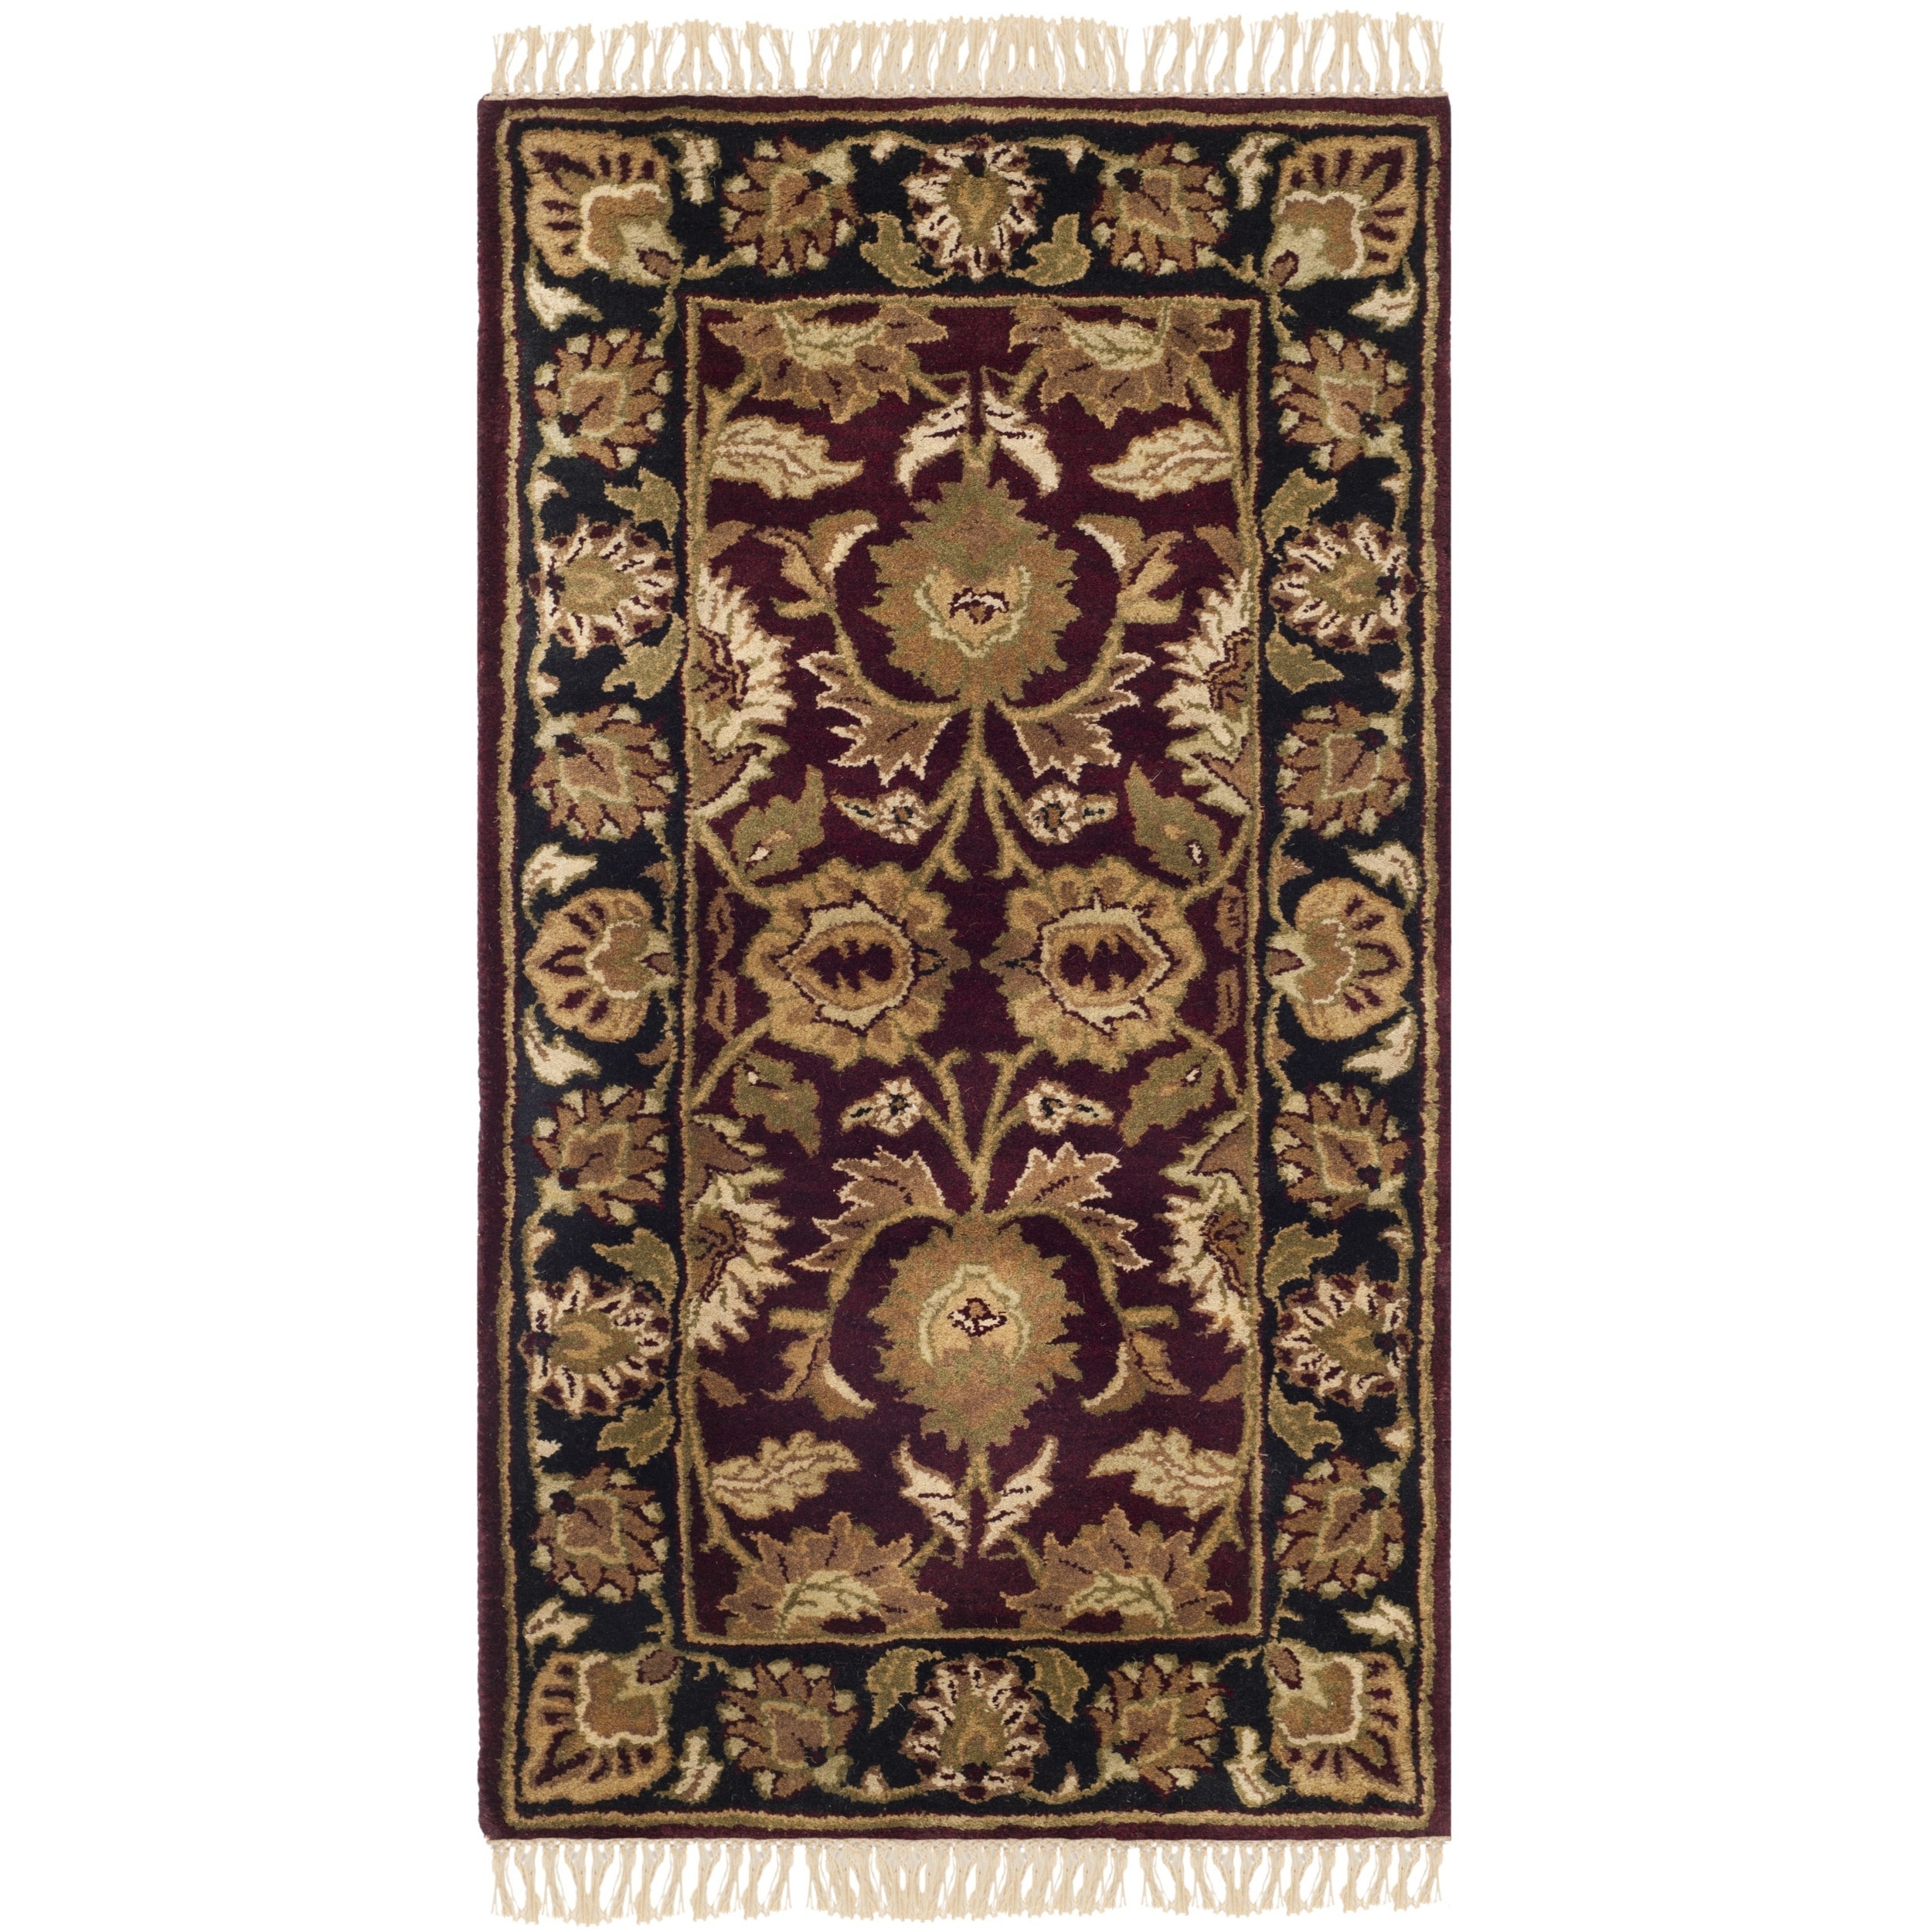 Safavieh Handmade Classic Multicolored Wool Rug (23 X 4)